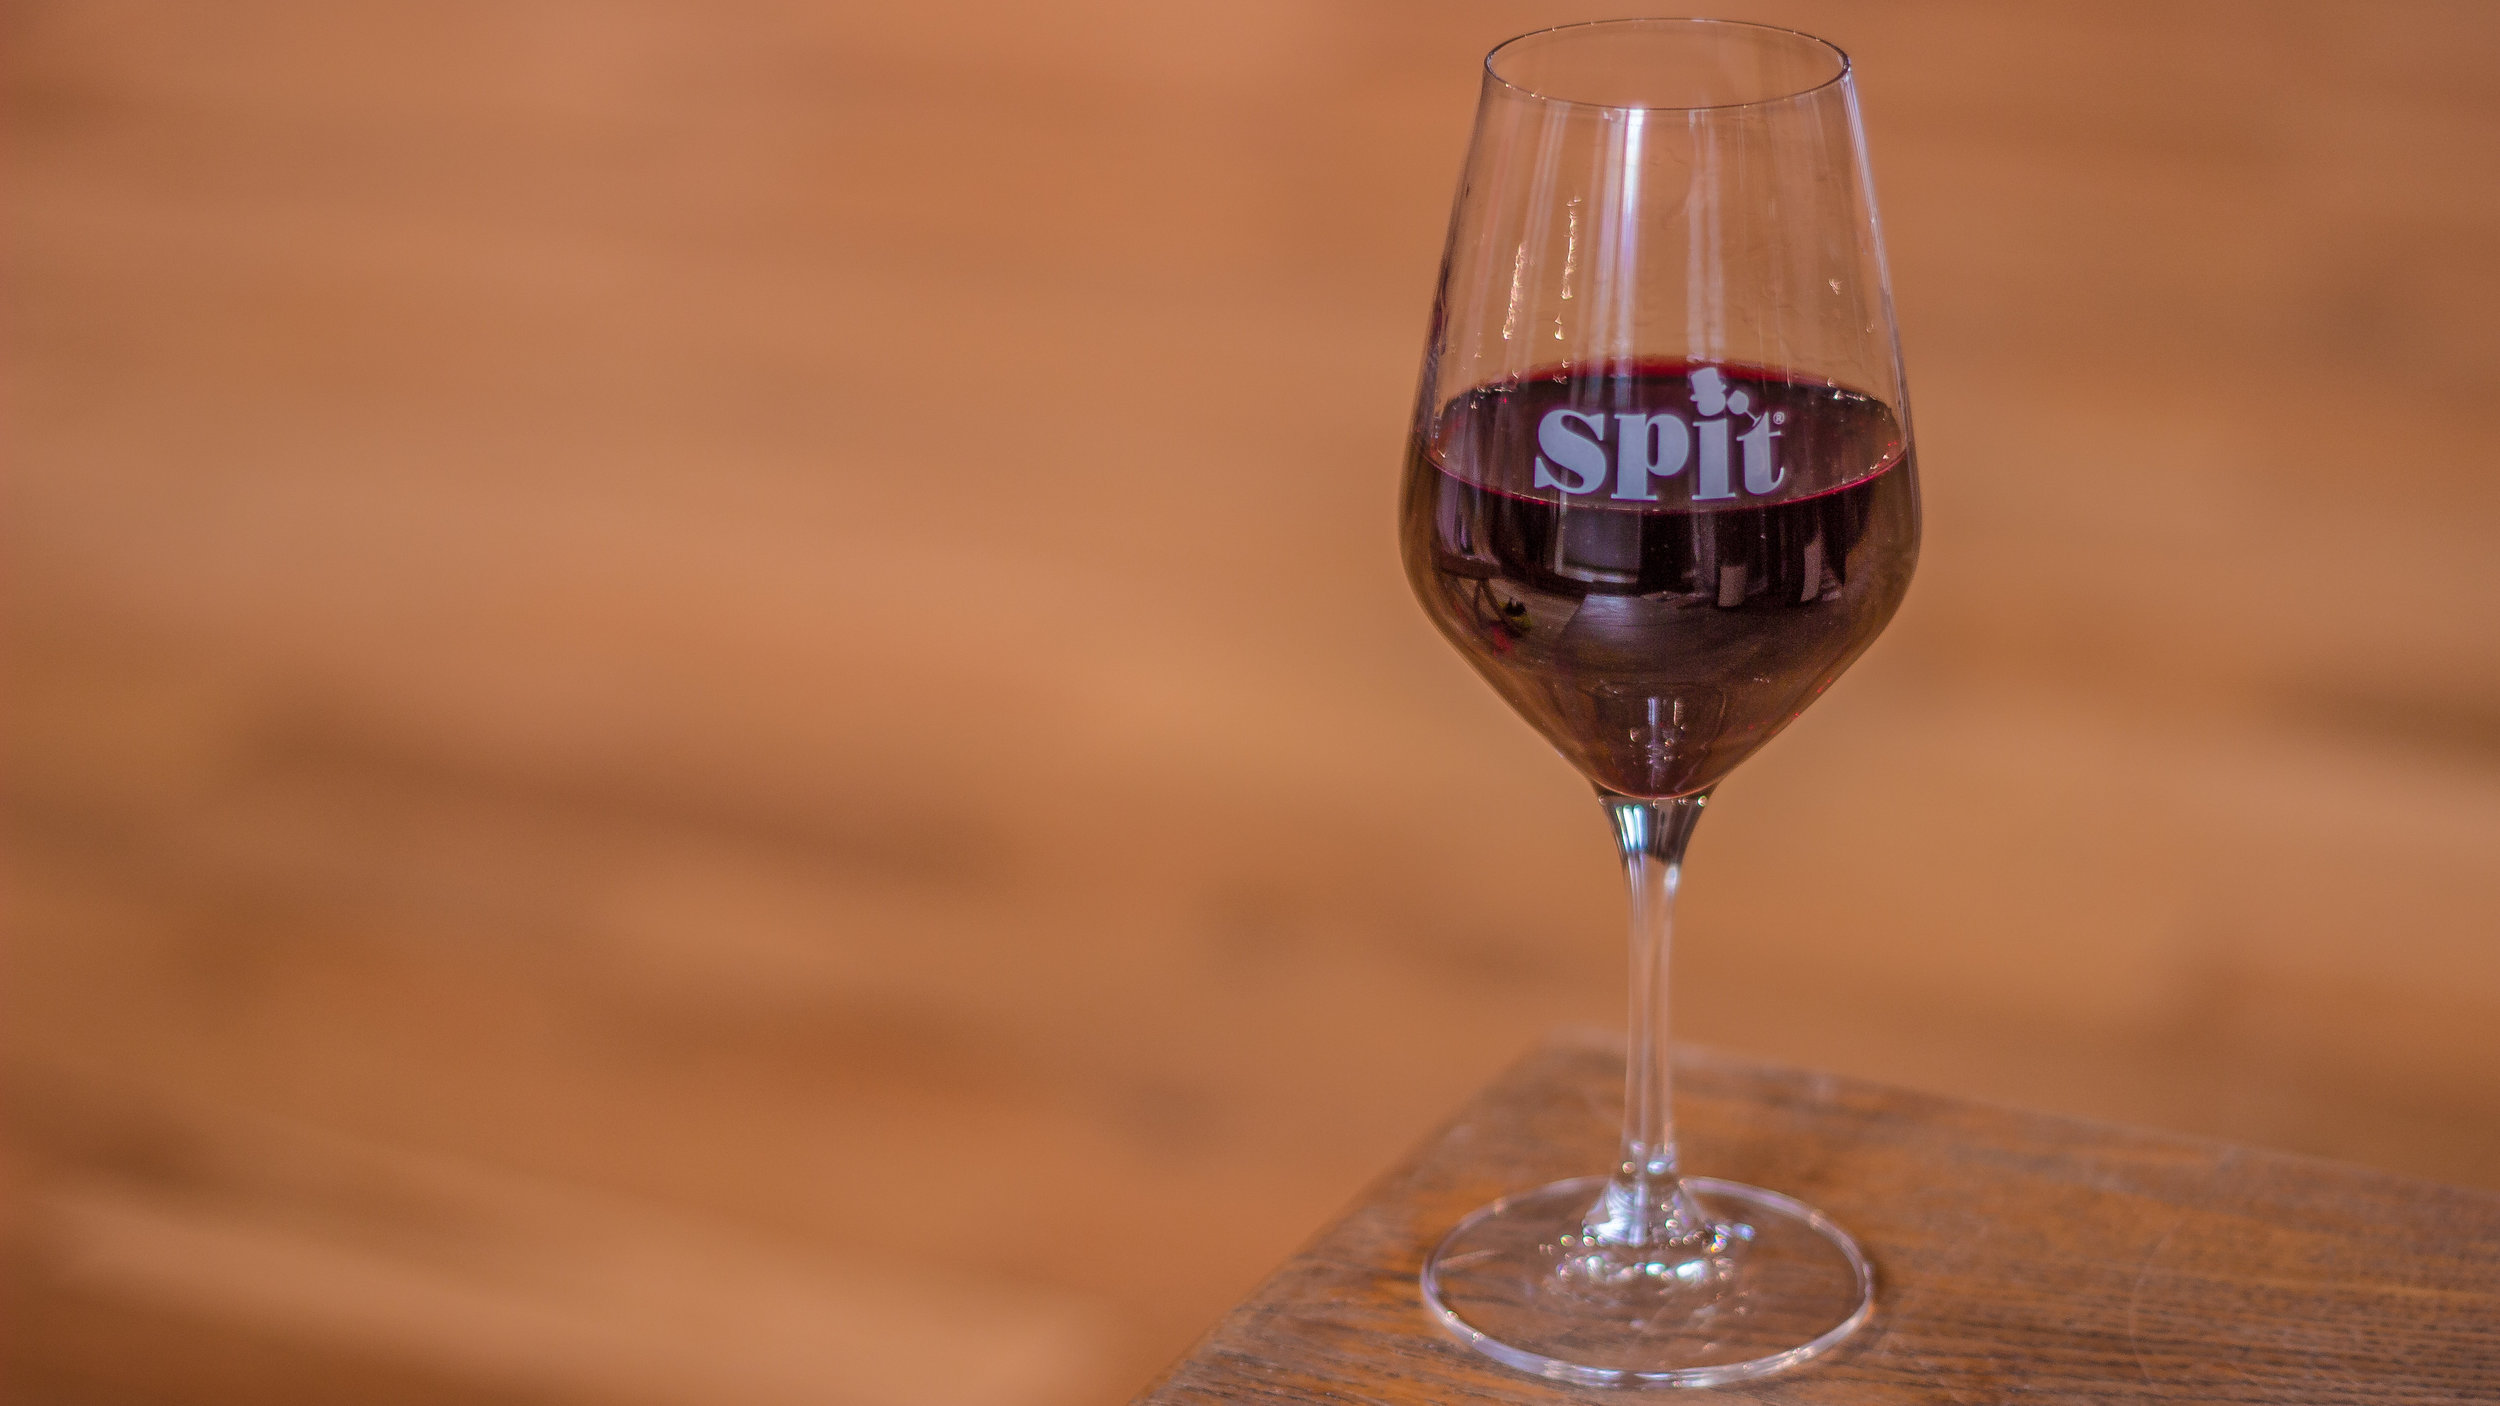 Spit Wine Fair-9874.jpg